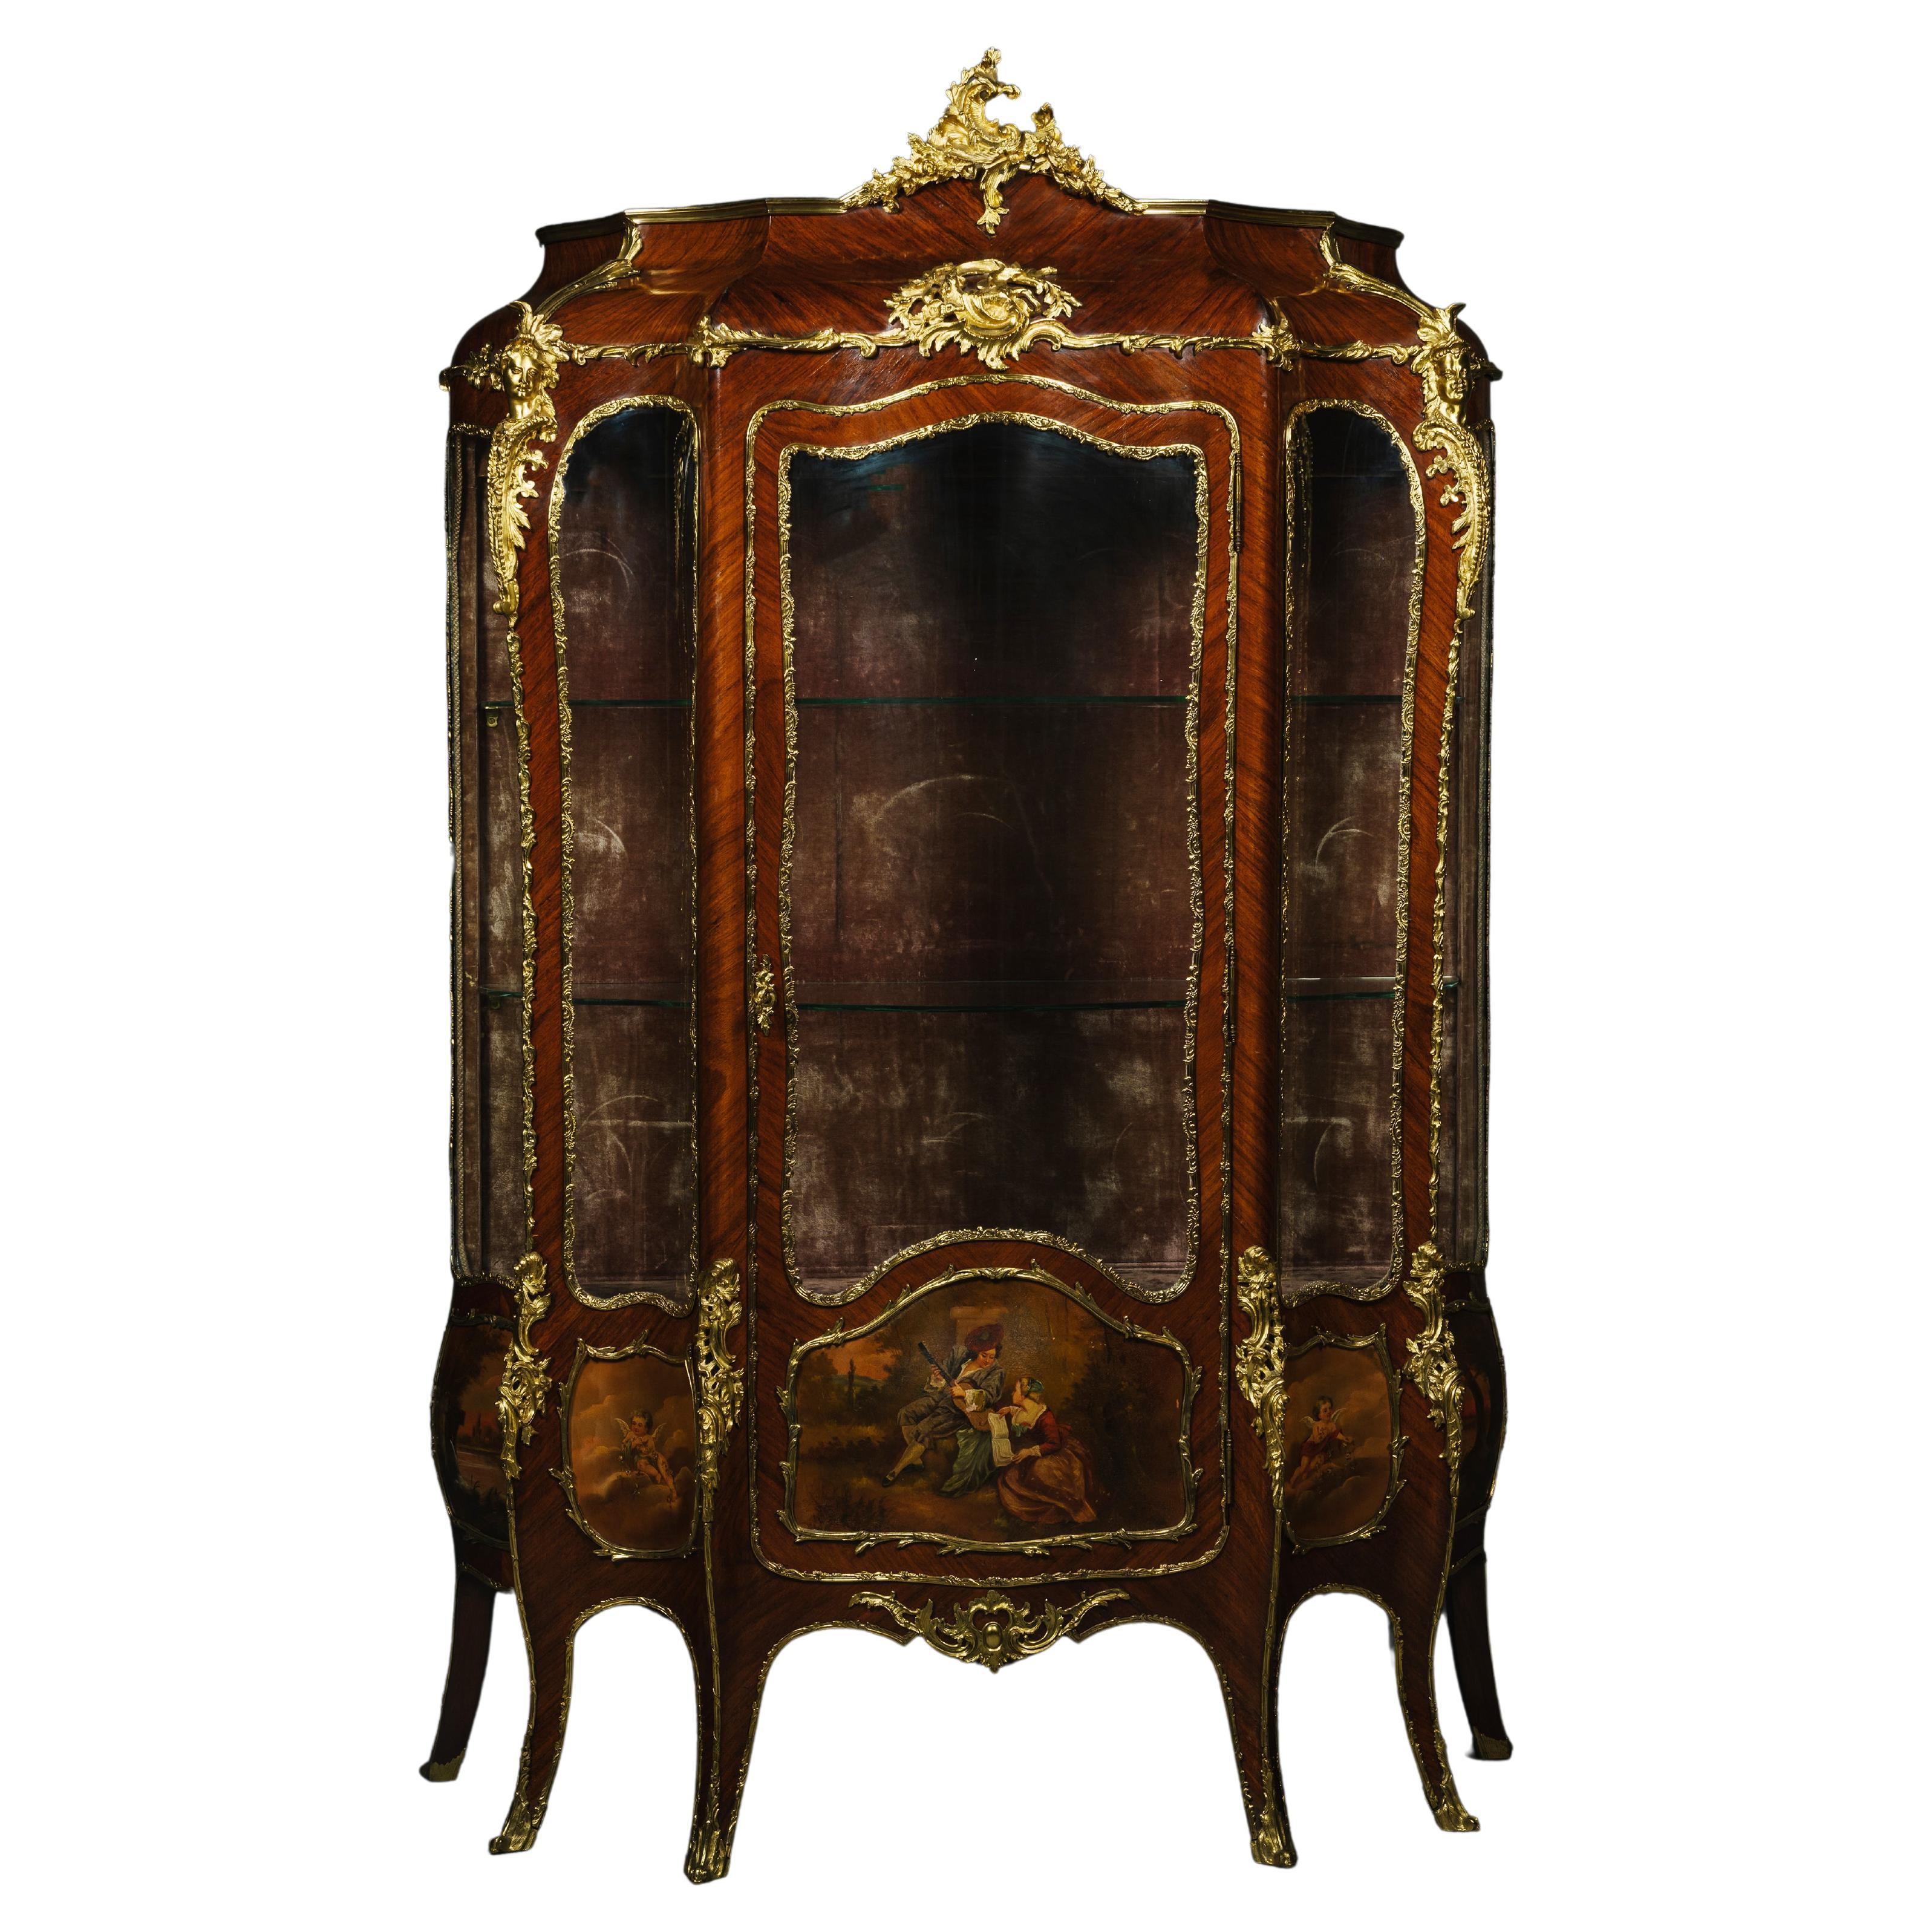 A Louis XV Style Gilt-Bronze Mounted, Vernis Martin Vitrine Cabinet